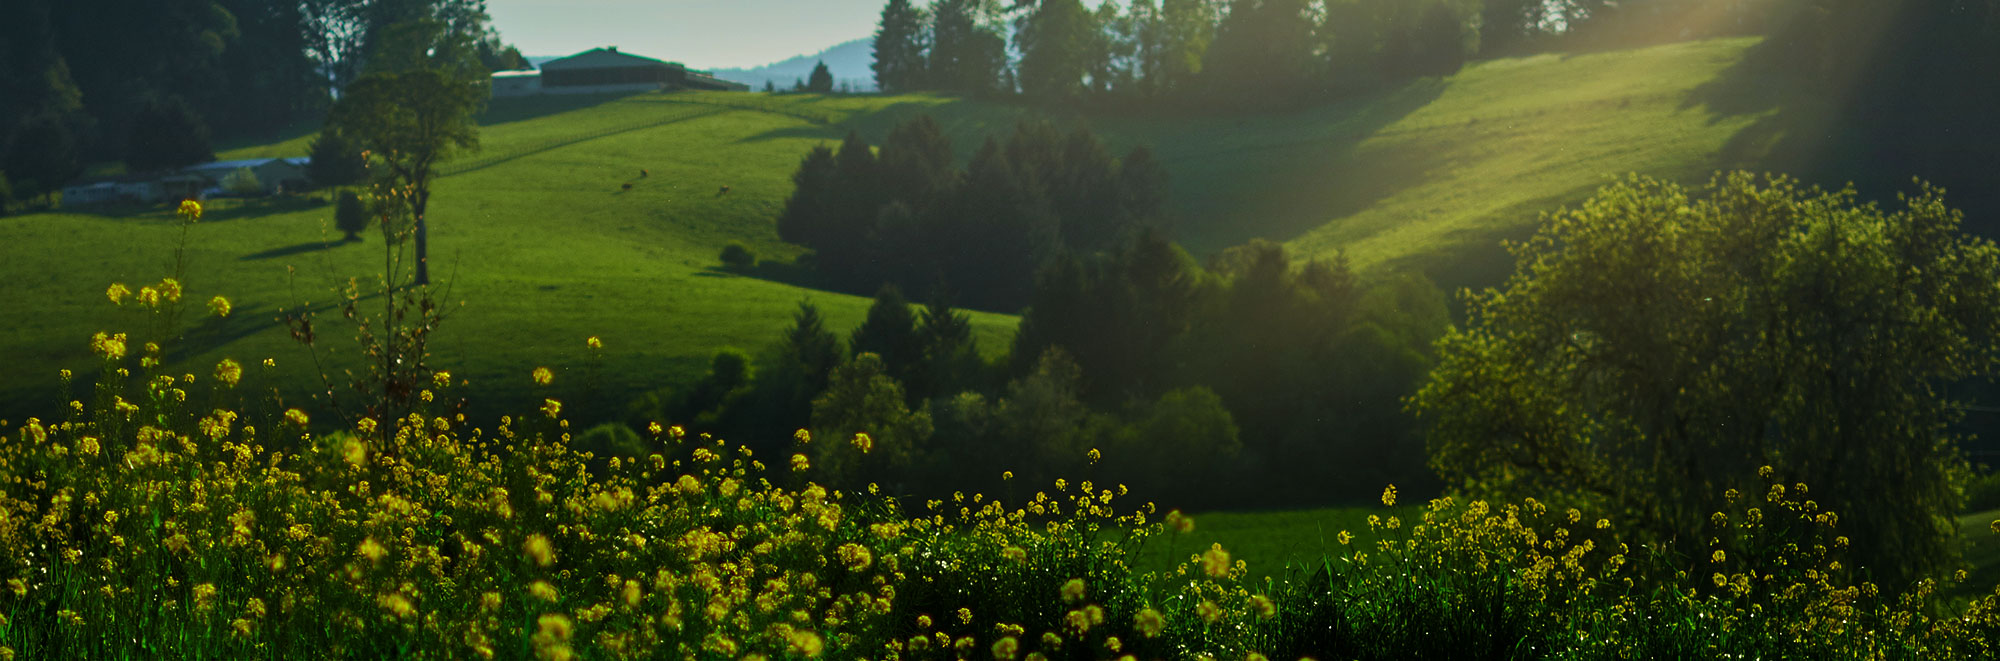 Lush green pastureland with yellow flowers